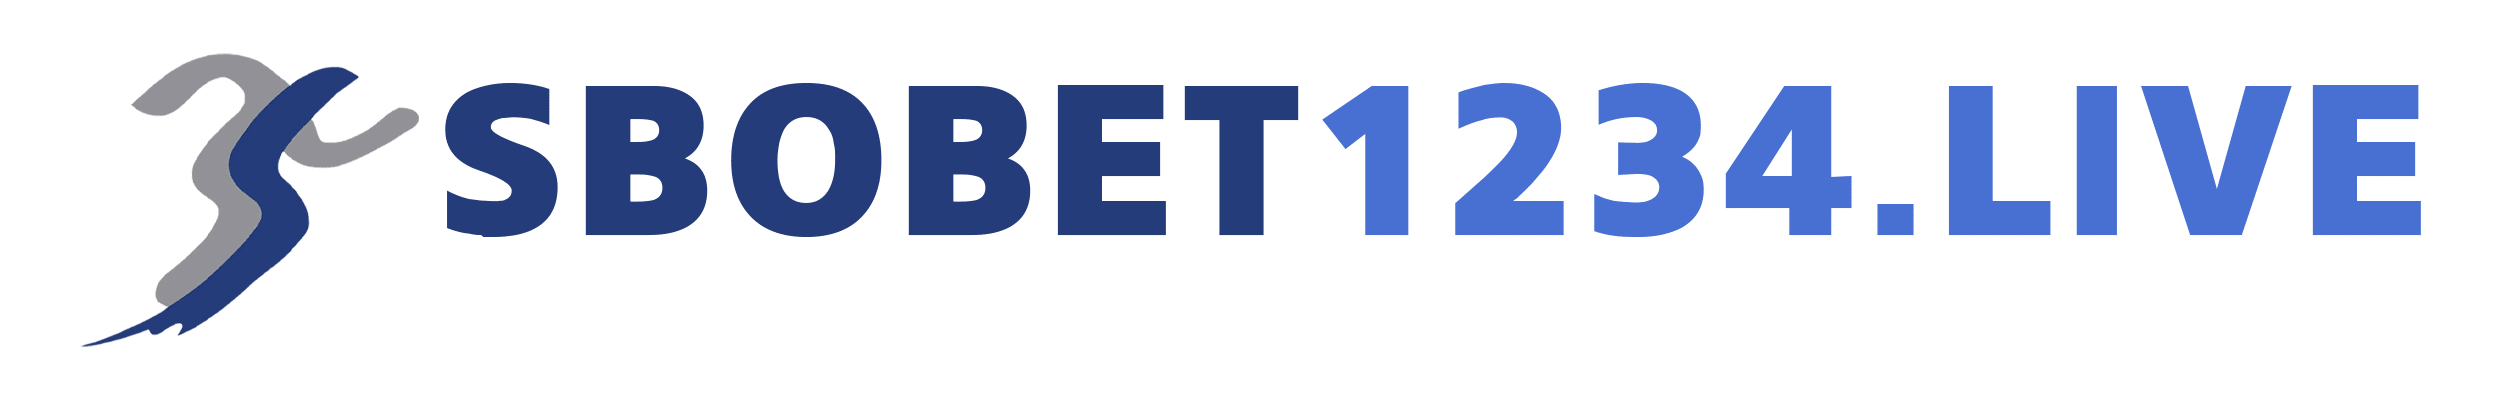 Sbobet1234-logo1